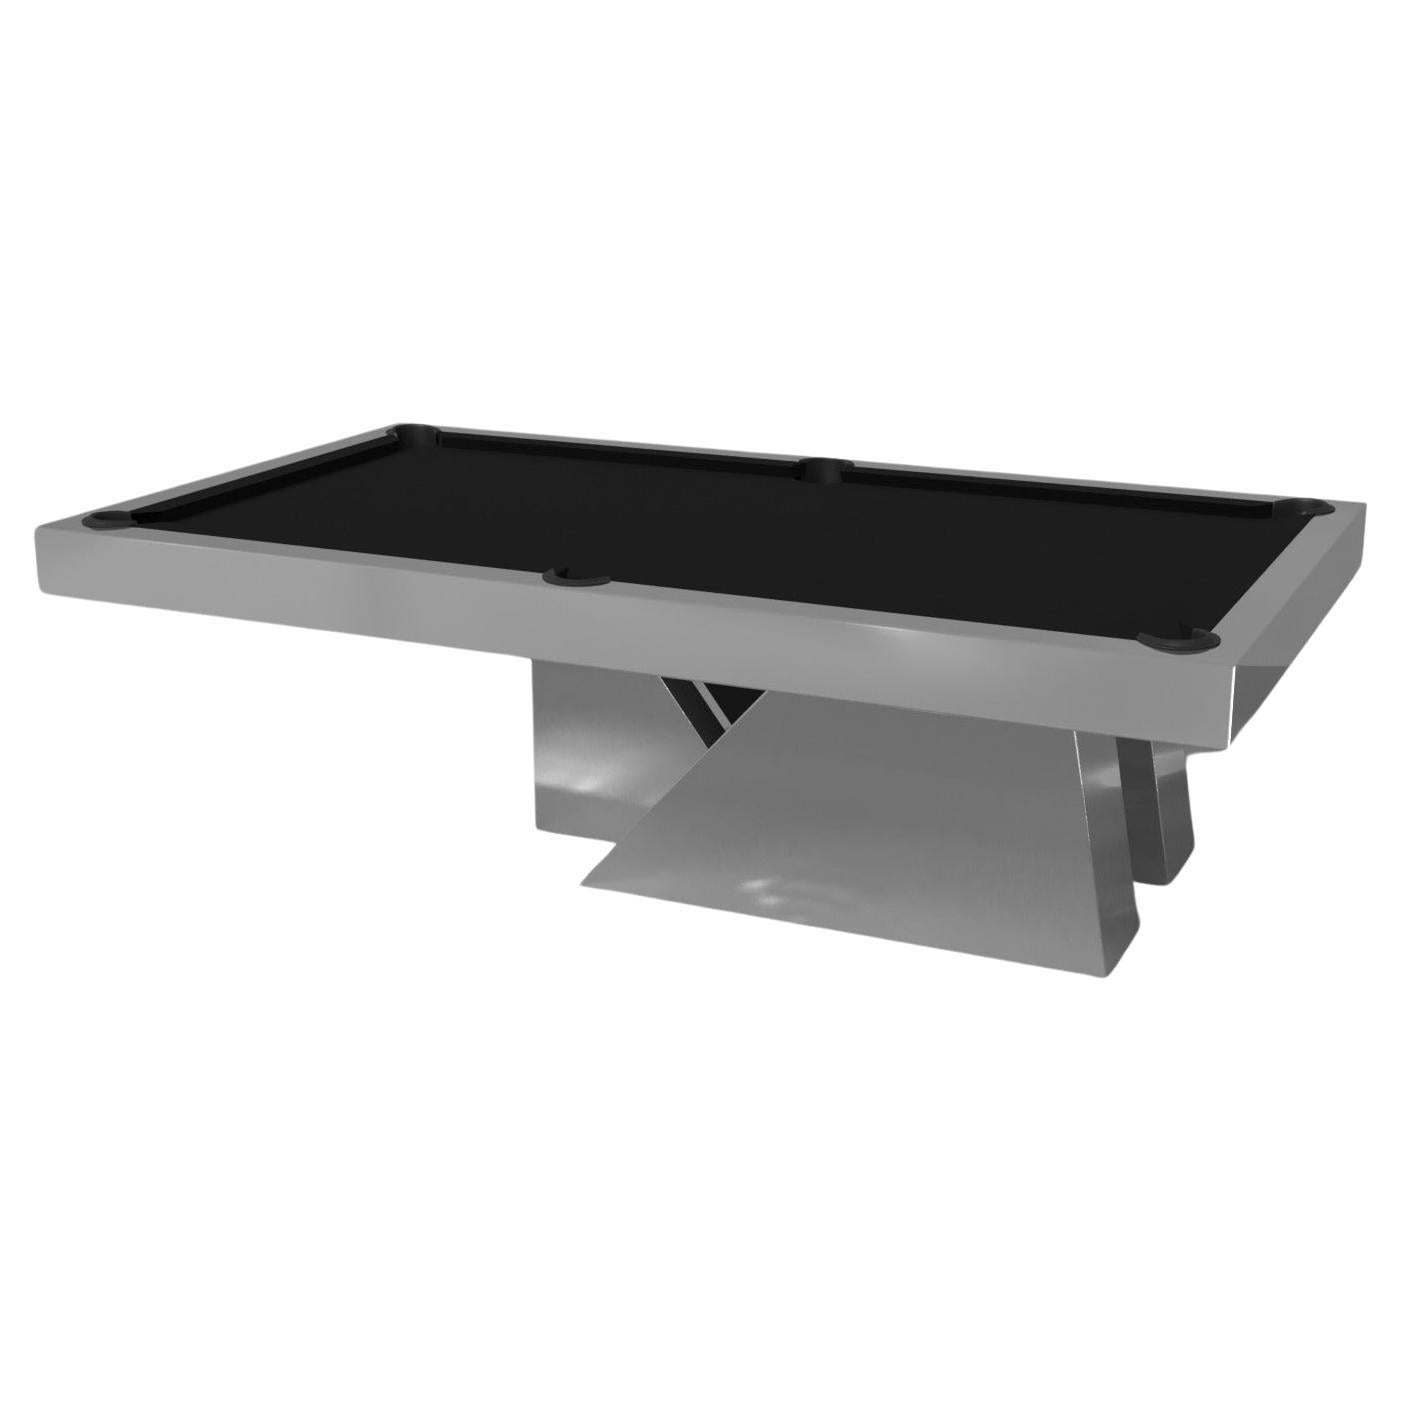 Elevate Customs Stilt Pool Table / Stainless Steel Metal in 7'/8' - Made in USA